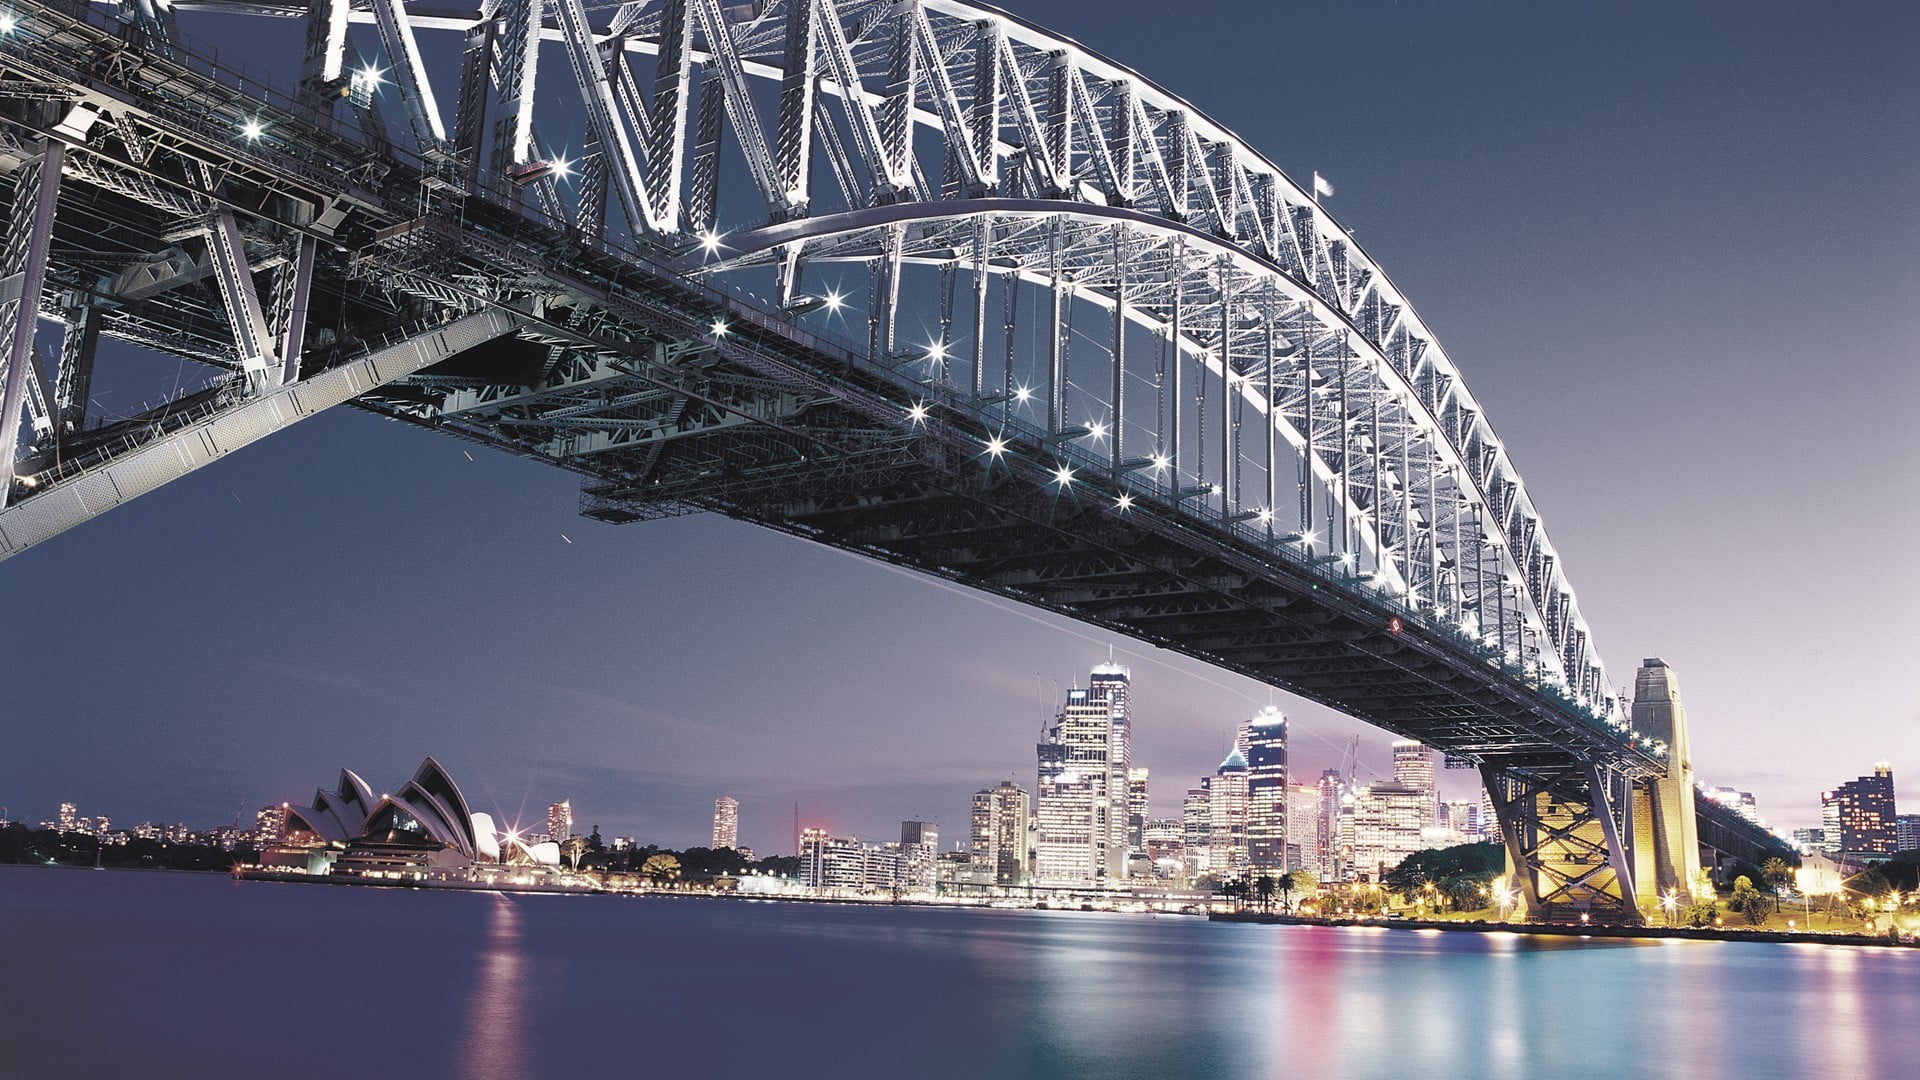 Sydney Harbor Bridge, Sydney, Australia, bridge, Sydney Opera House